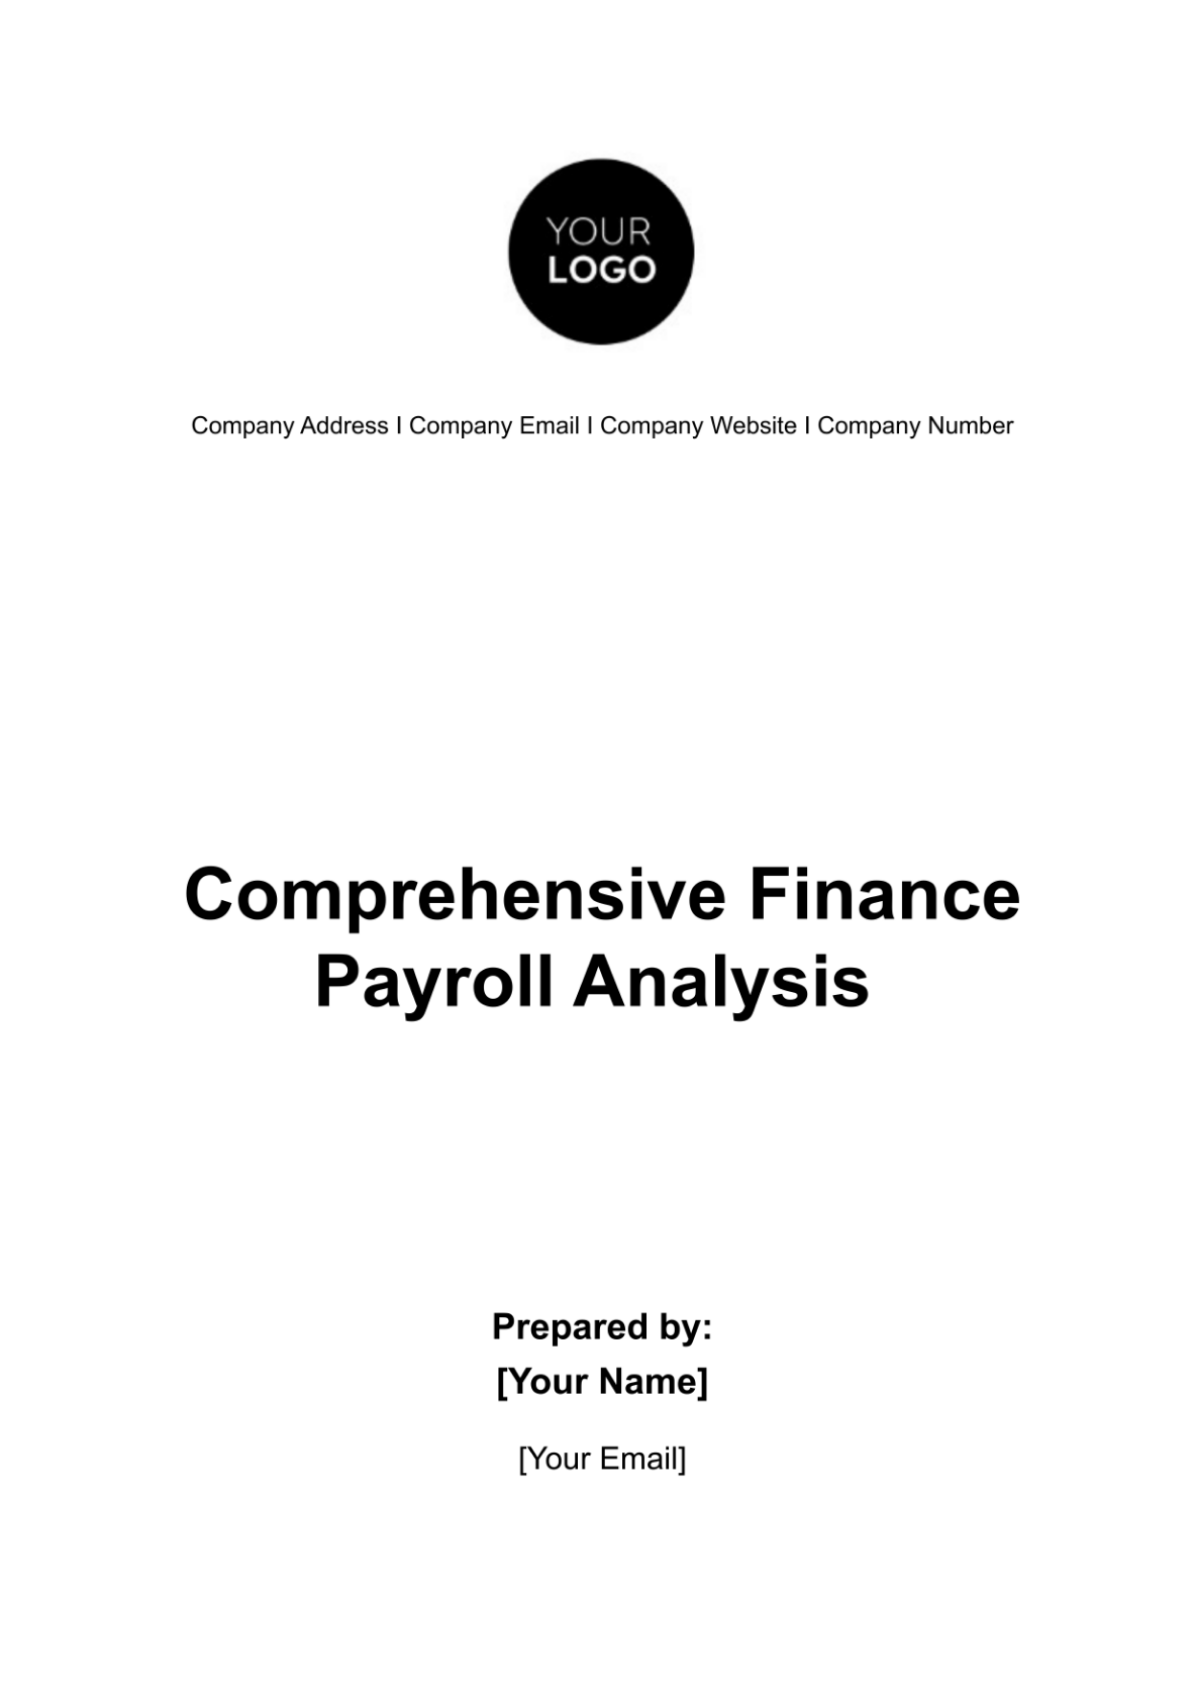 Comprehensive Finance Payroll Analysis Template